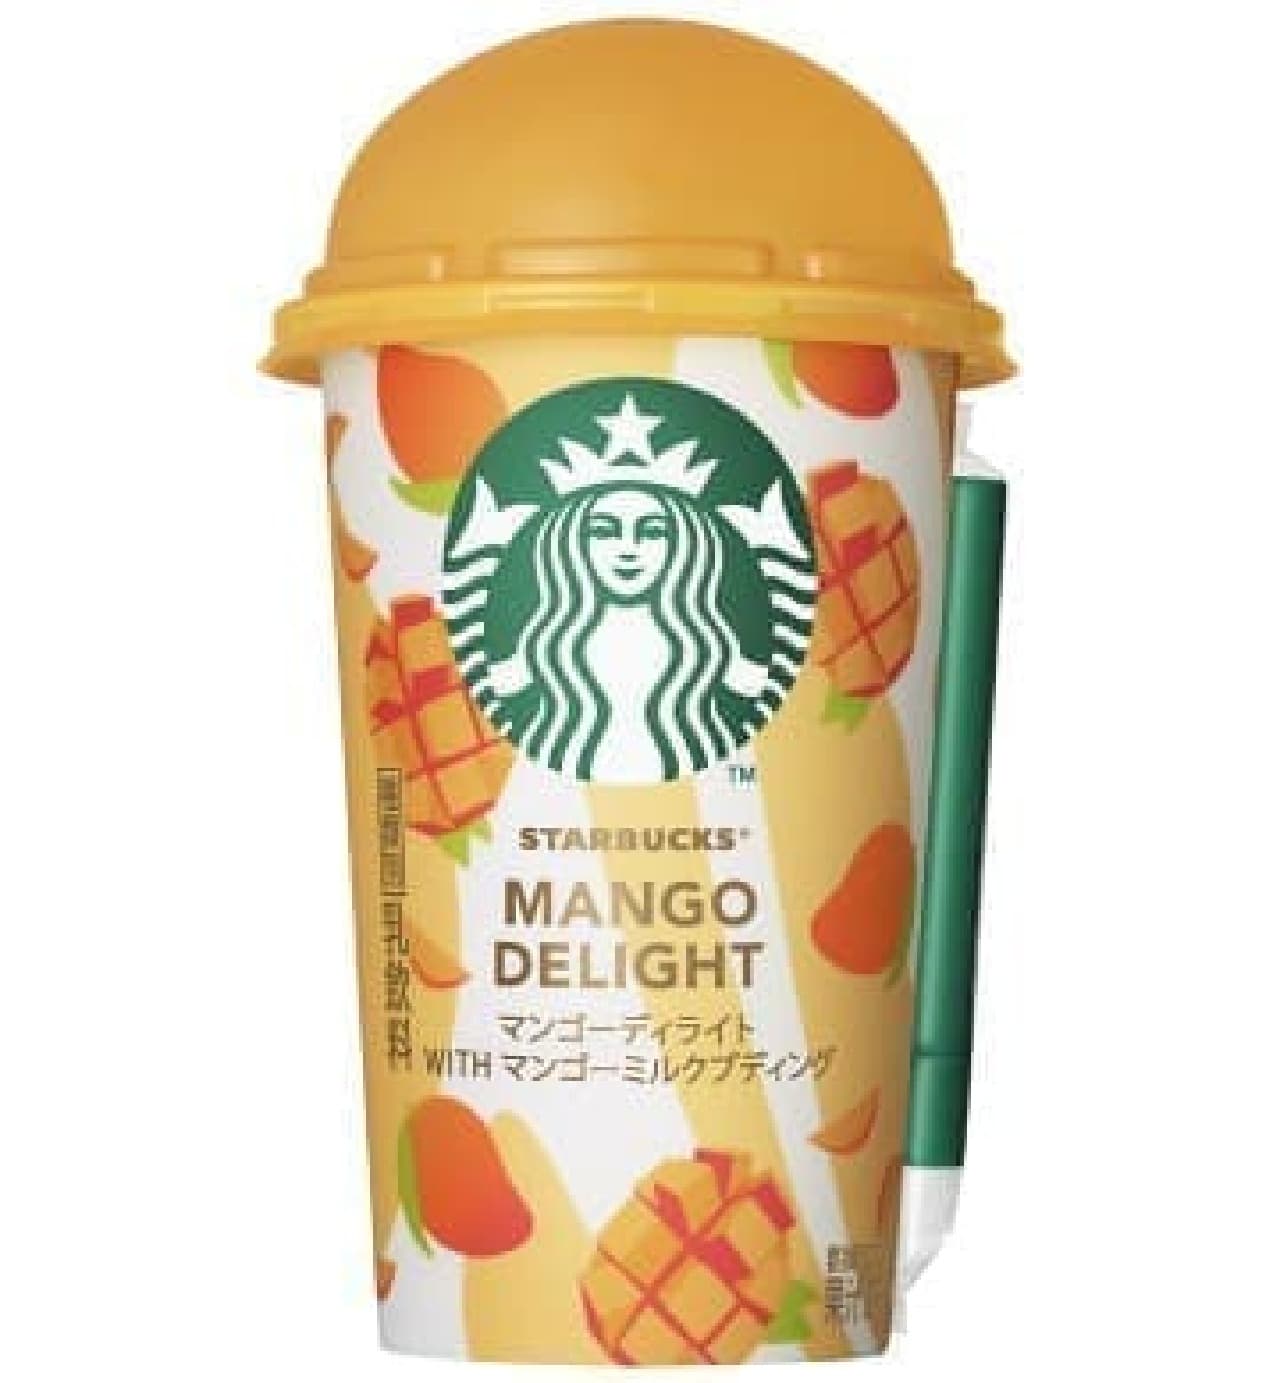 Starbucks Mango Delight WITH Mango Milk Pudding